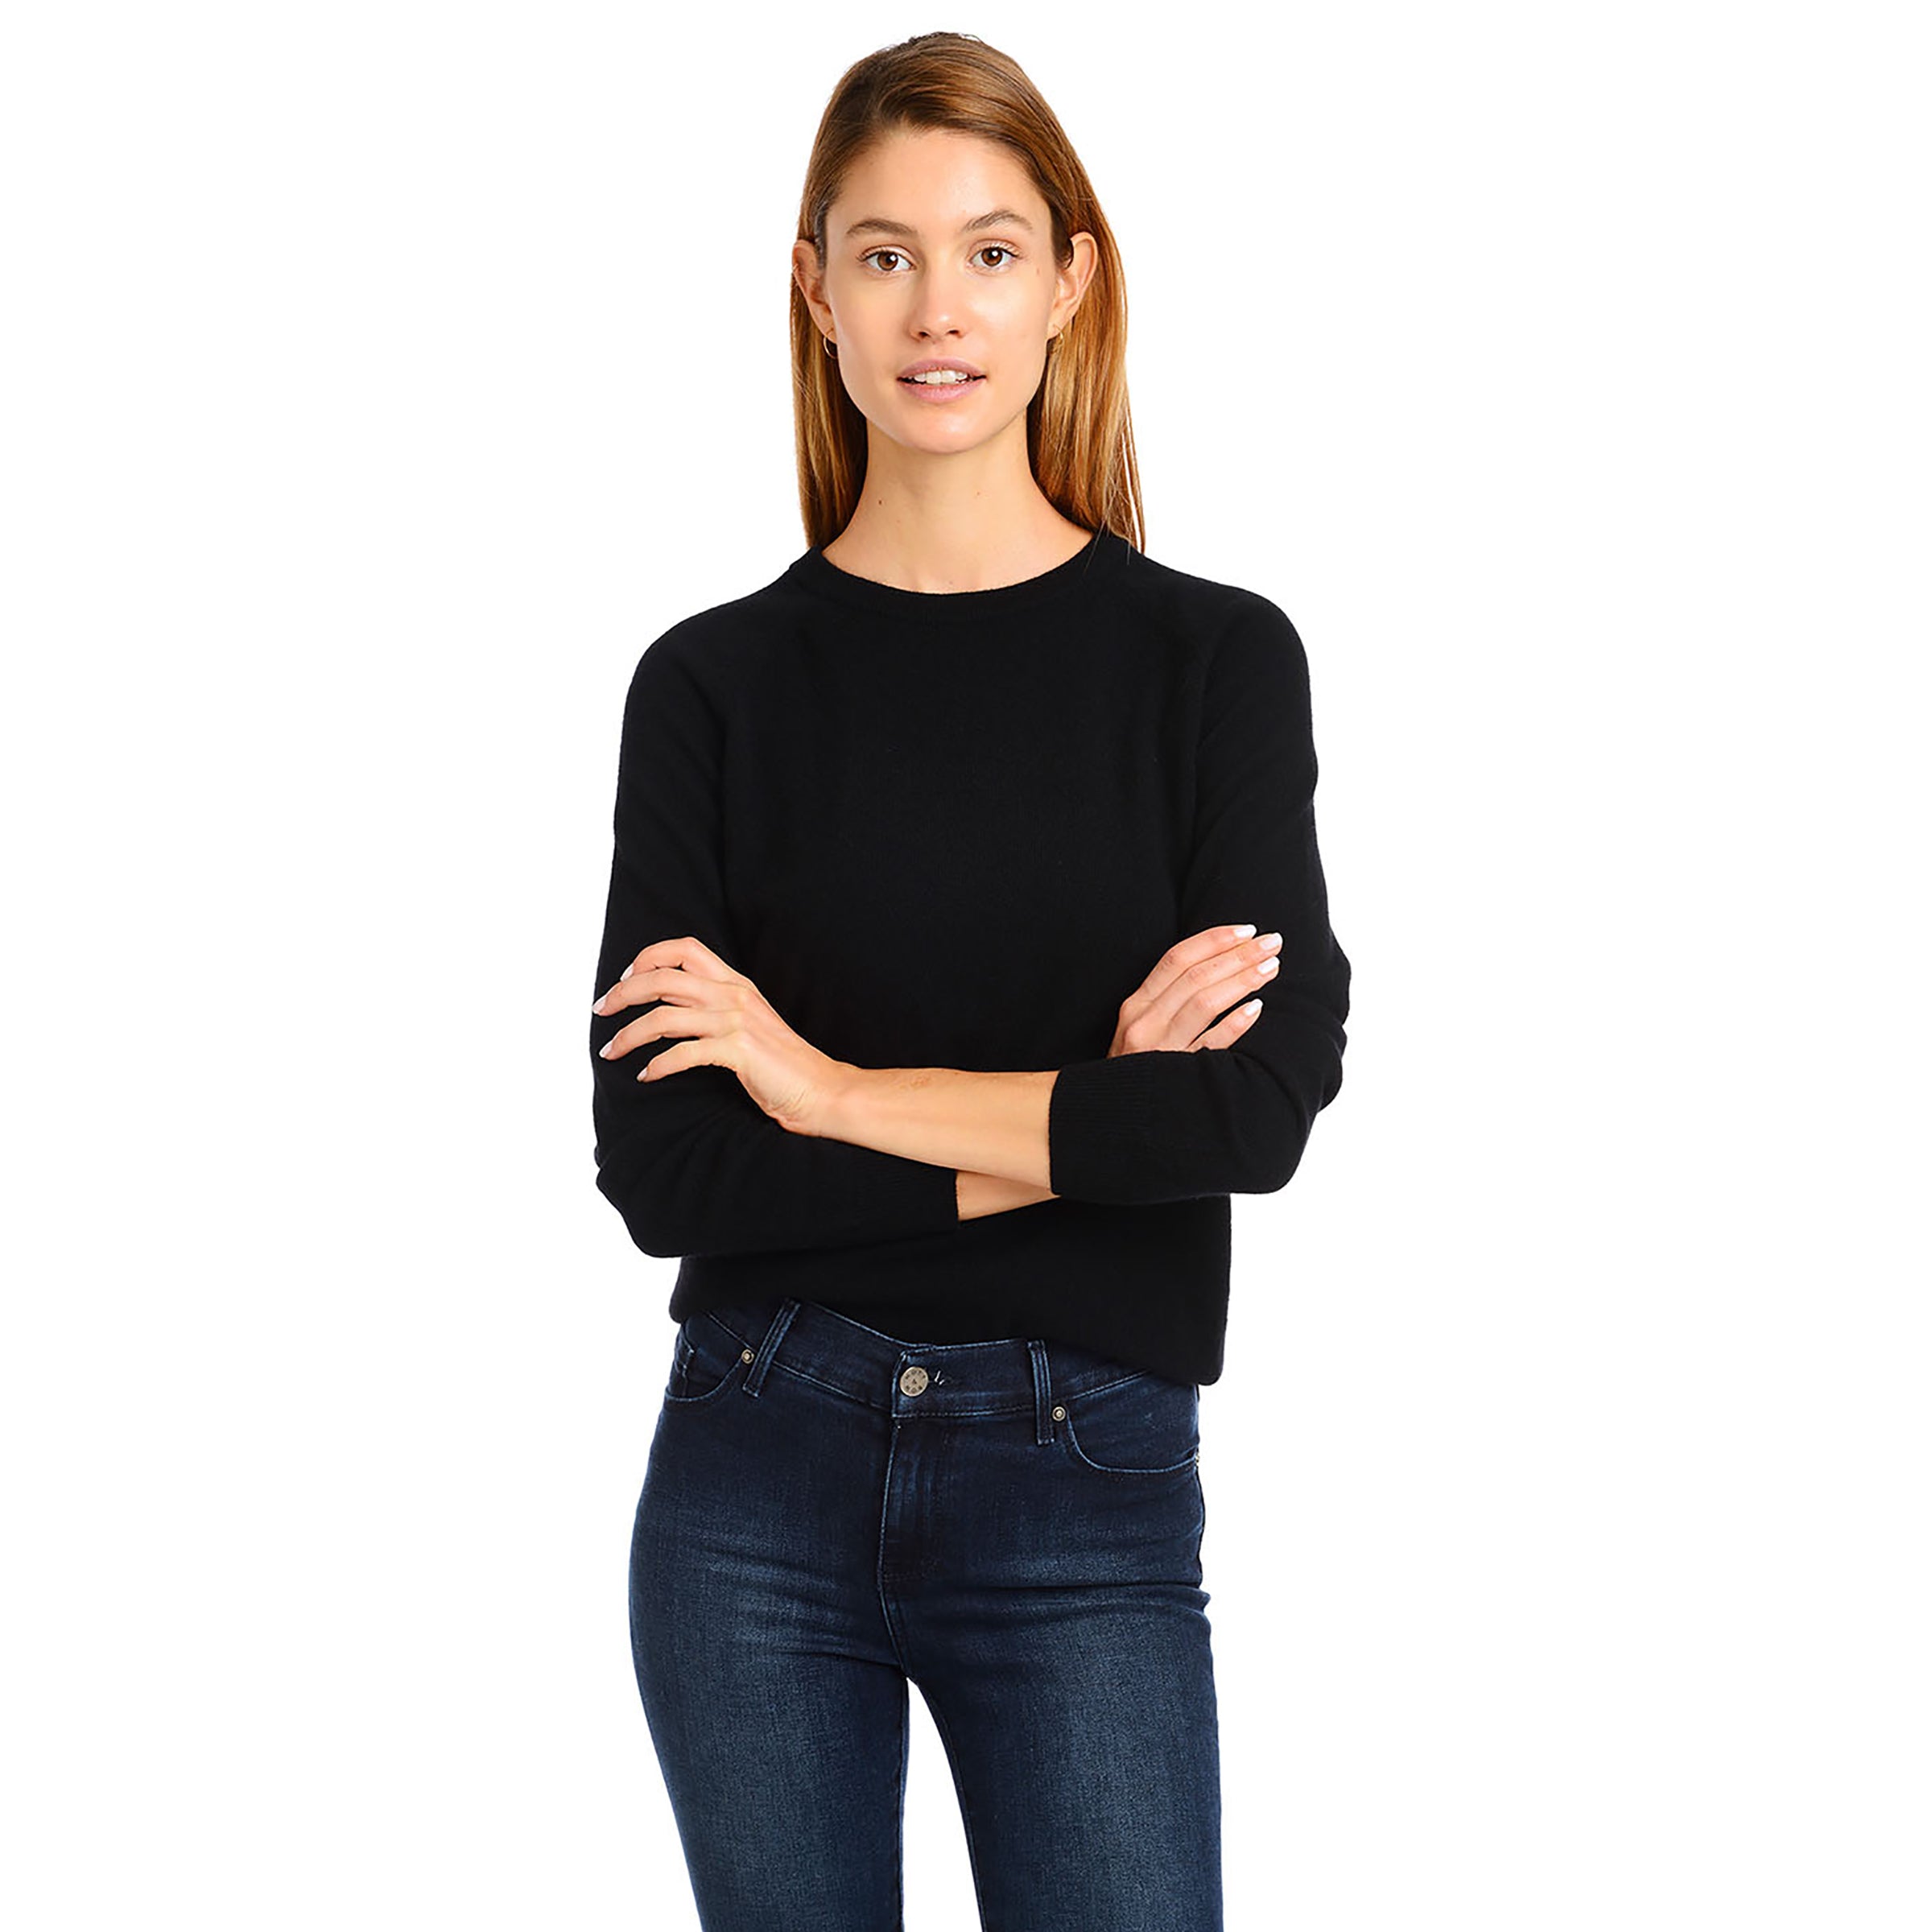 Women wearing Black Cashmere Raglan Crew Cambridge Sweater